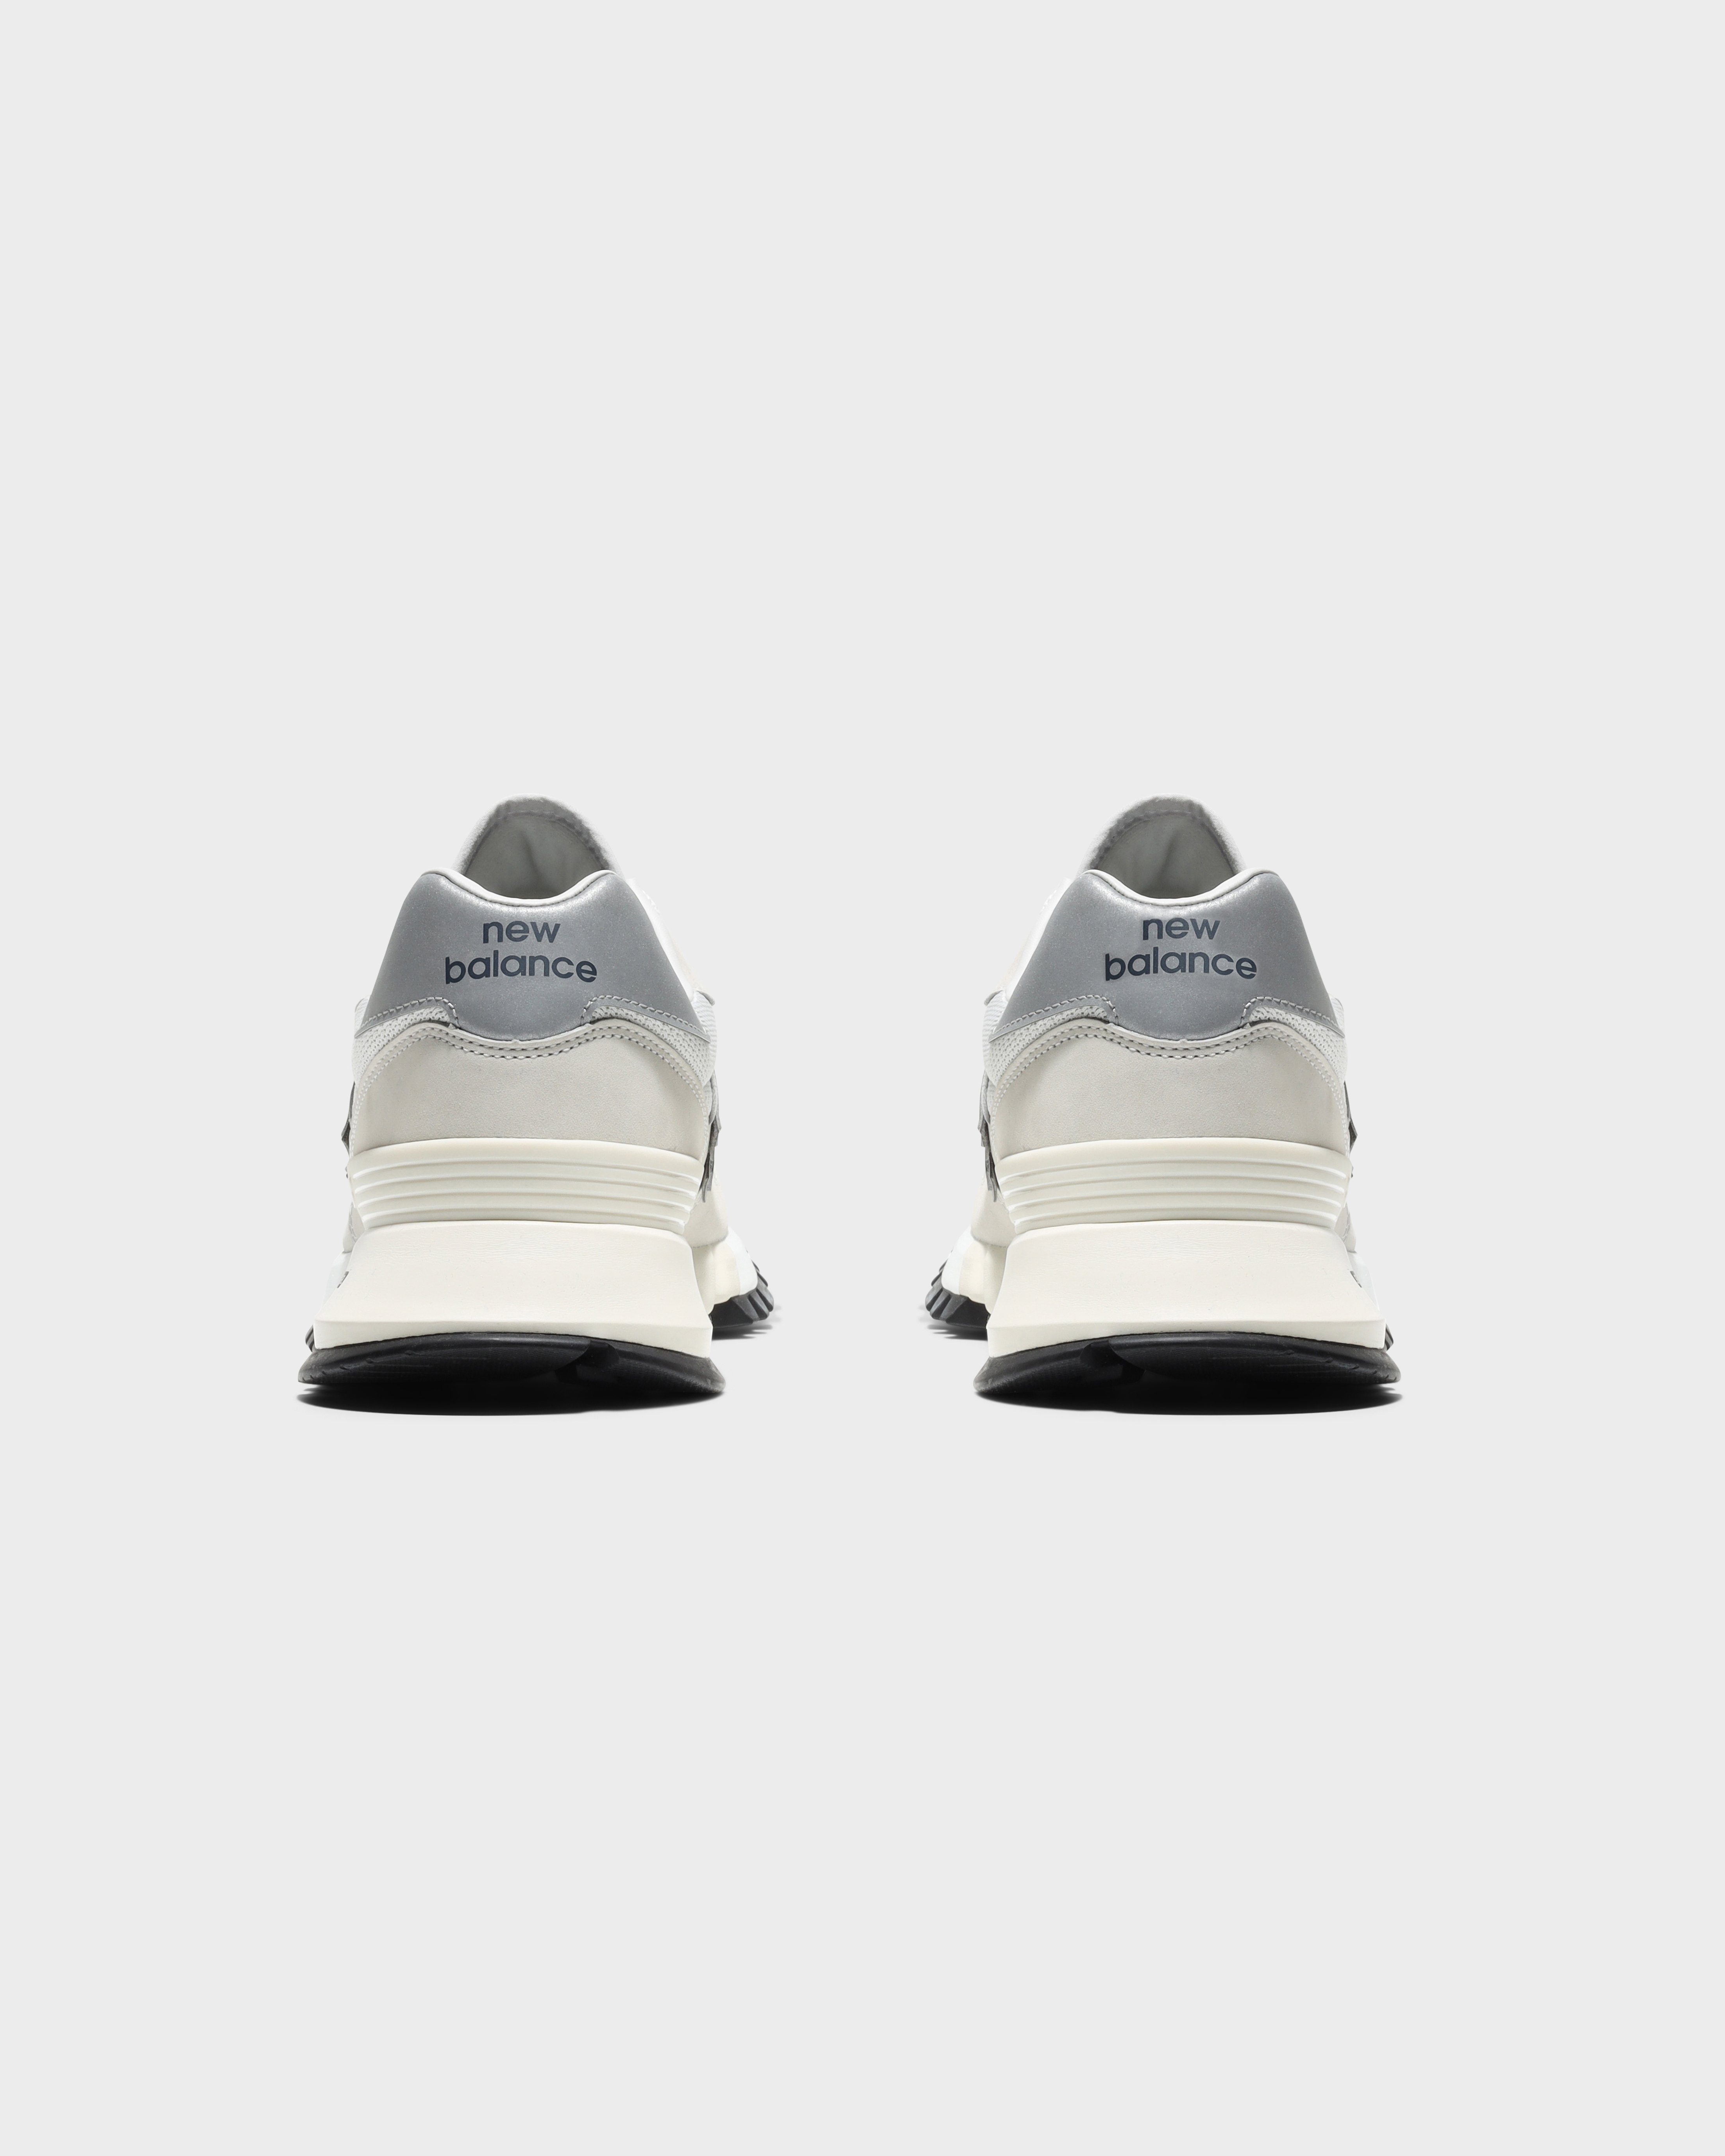 New Balance - Tokyo Design Studio R-C1300 Grey - Footwear - White - Image 3